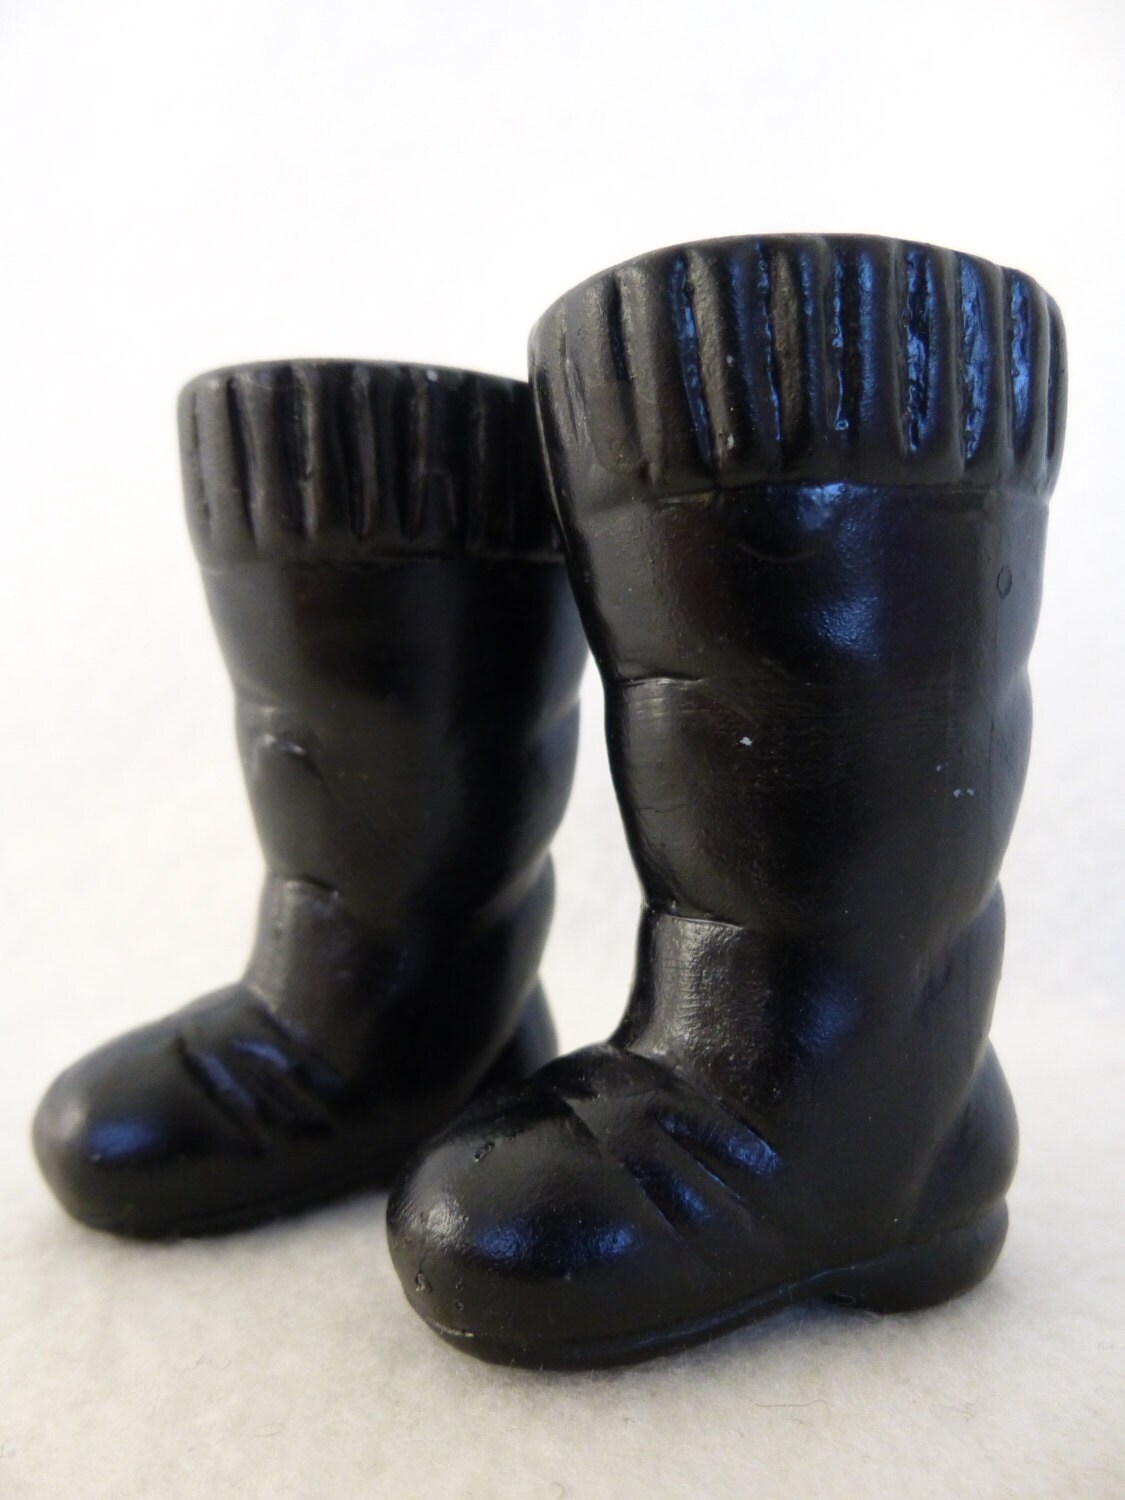 Porcelain Black Santa Boots by MooglasMarket on Etsy